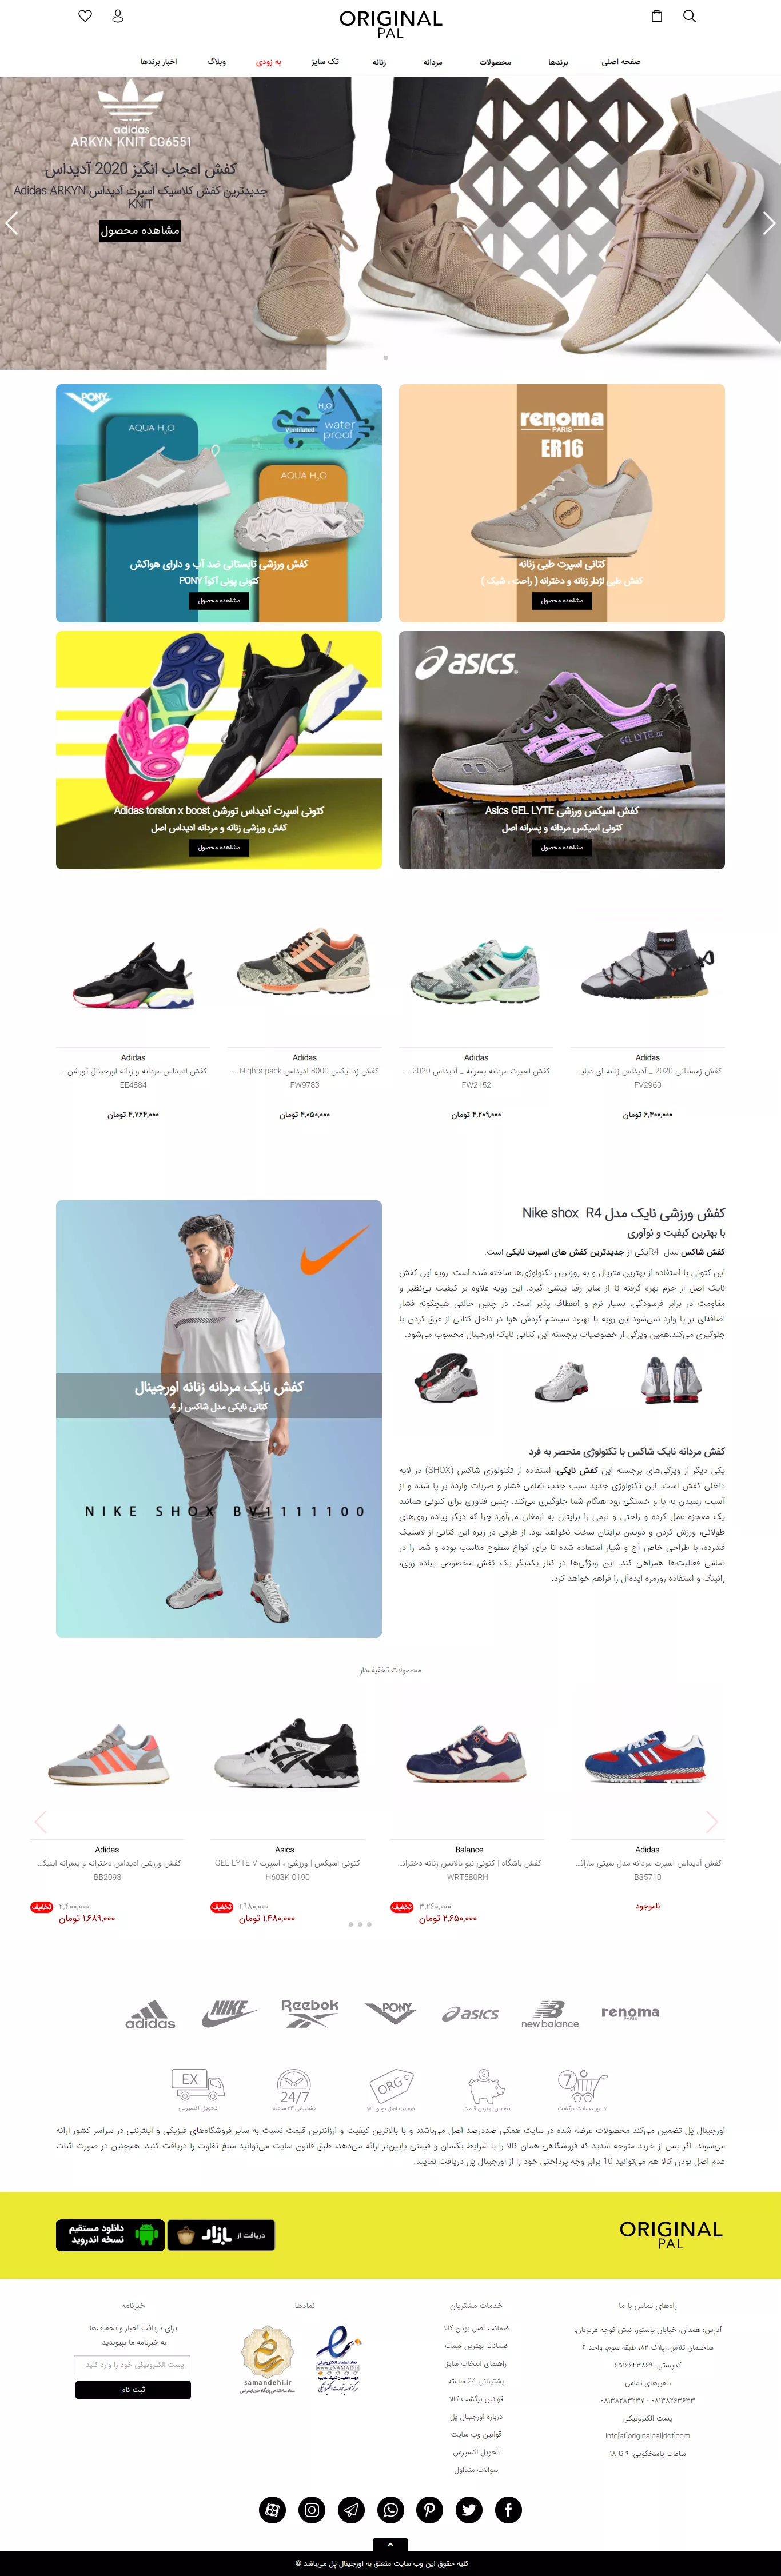 OriginalPal website design